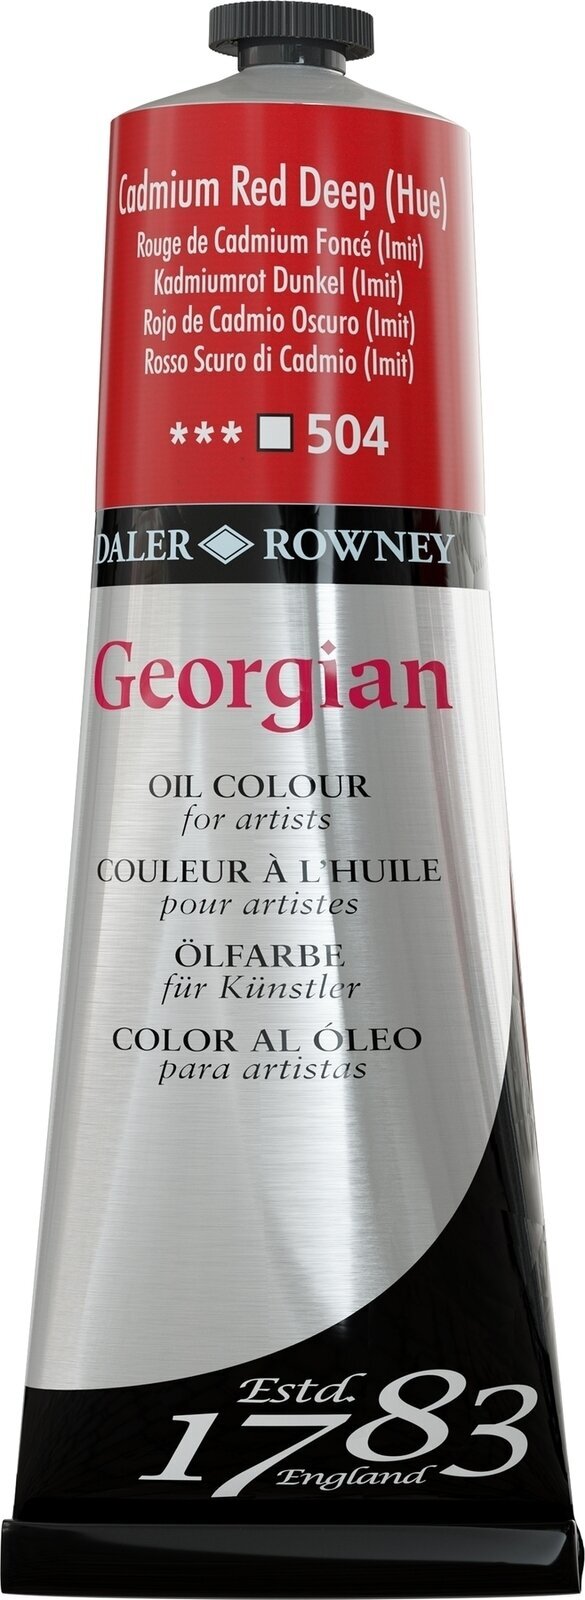 Oil colour Daler Rowney Georgian Oil Paint Cadmium Red Deep Hue 225 ml 1 pc